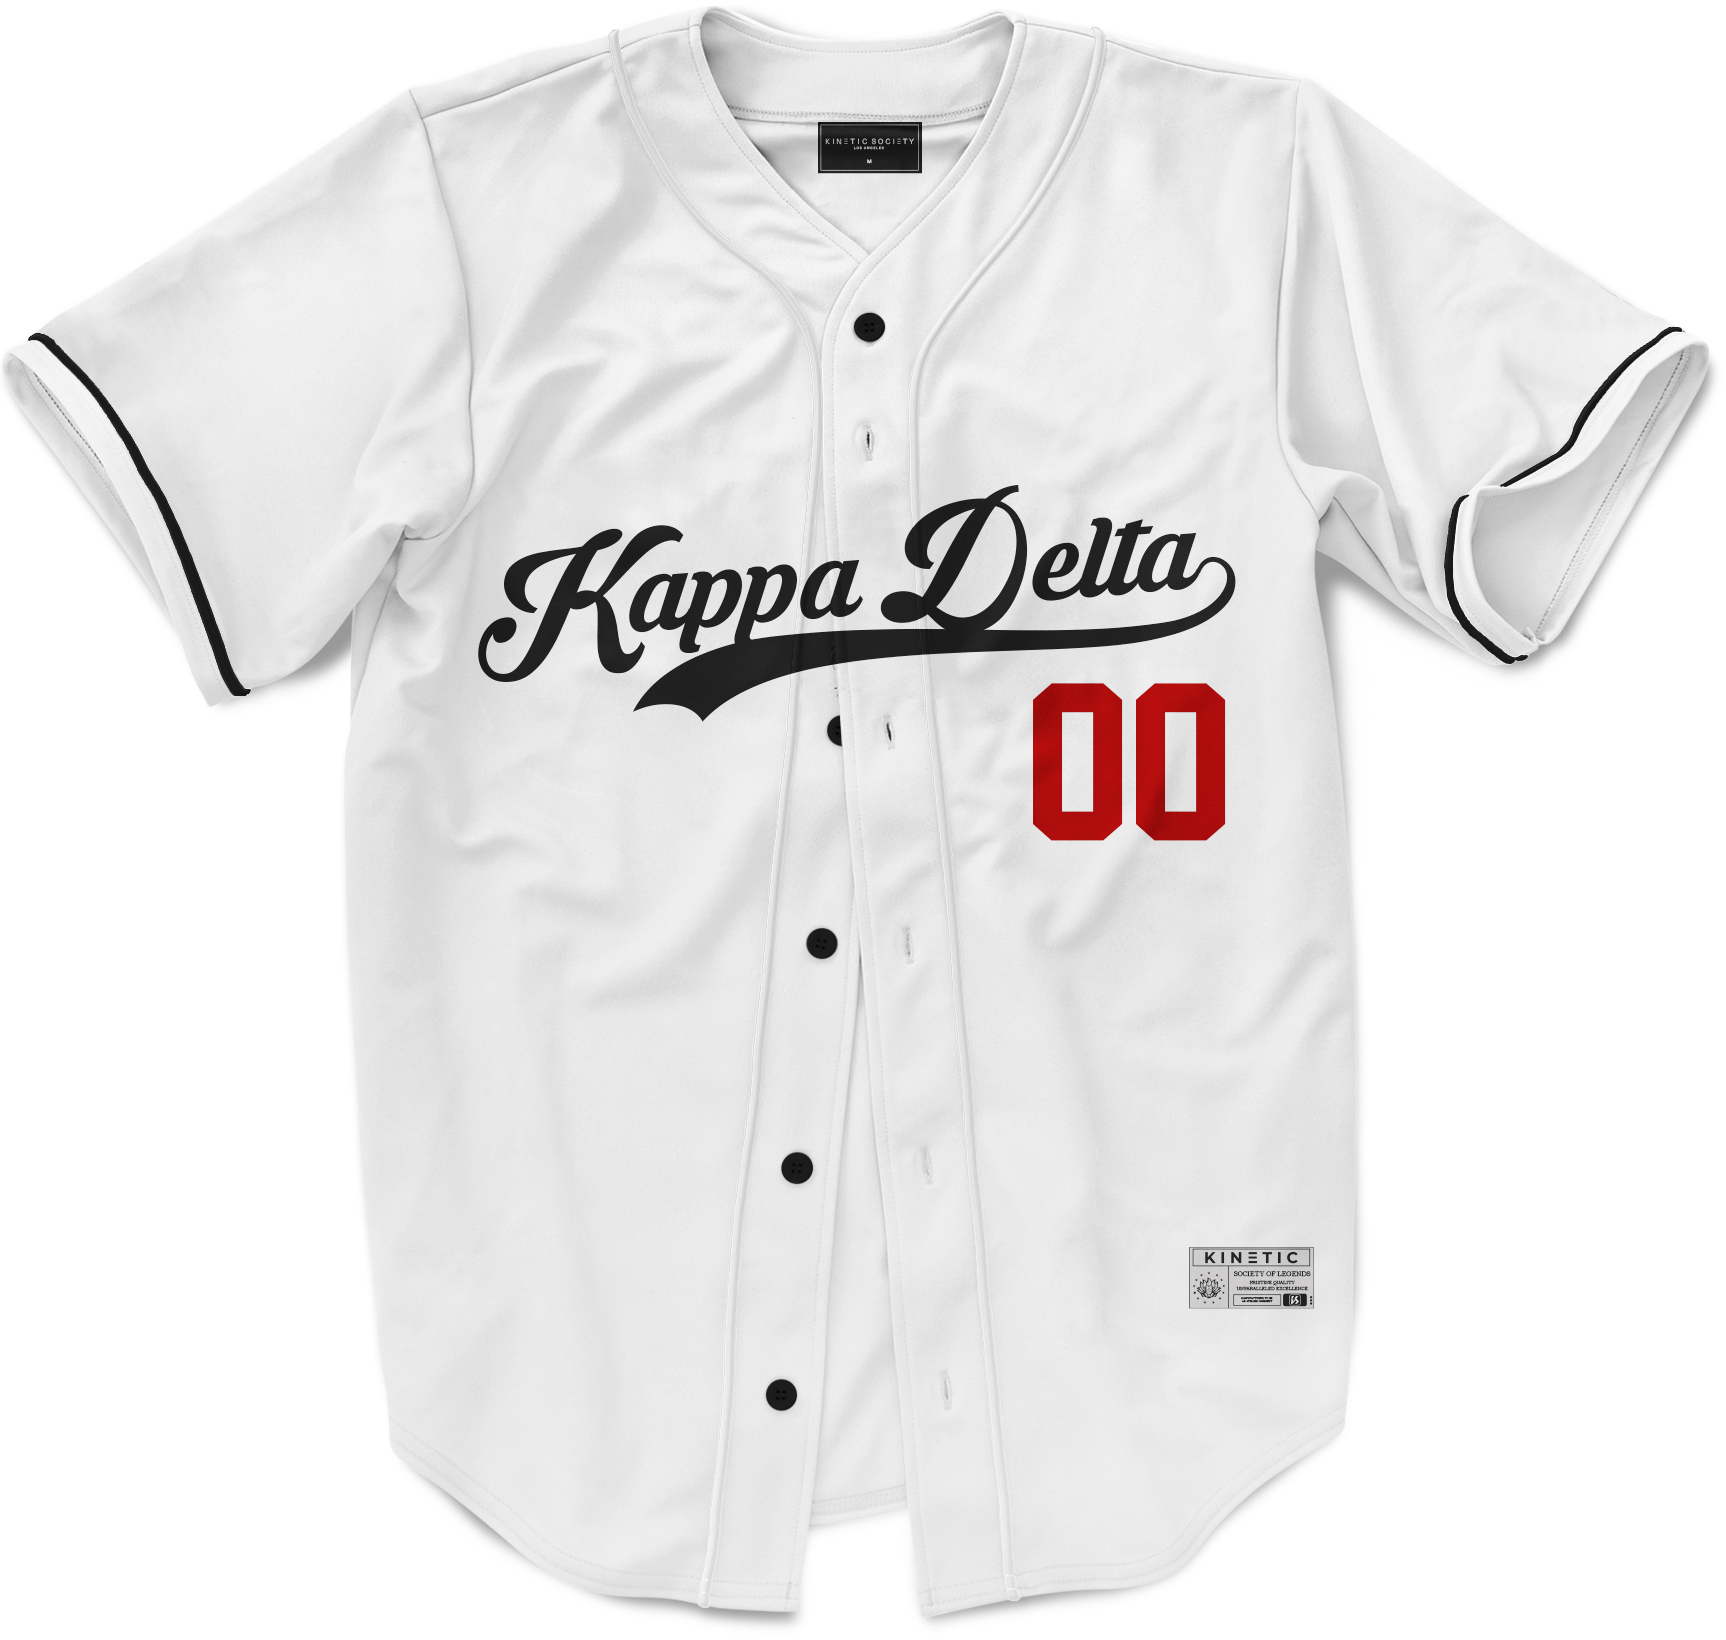 Kappa Delta - Classic Ballpark Red Baseball Jersey